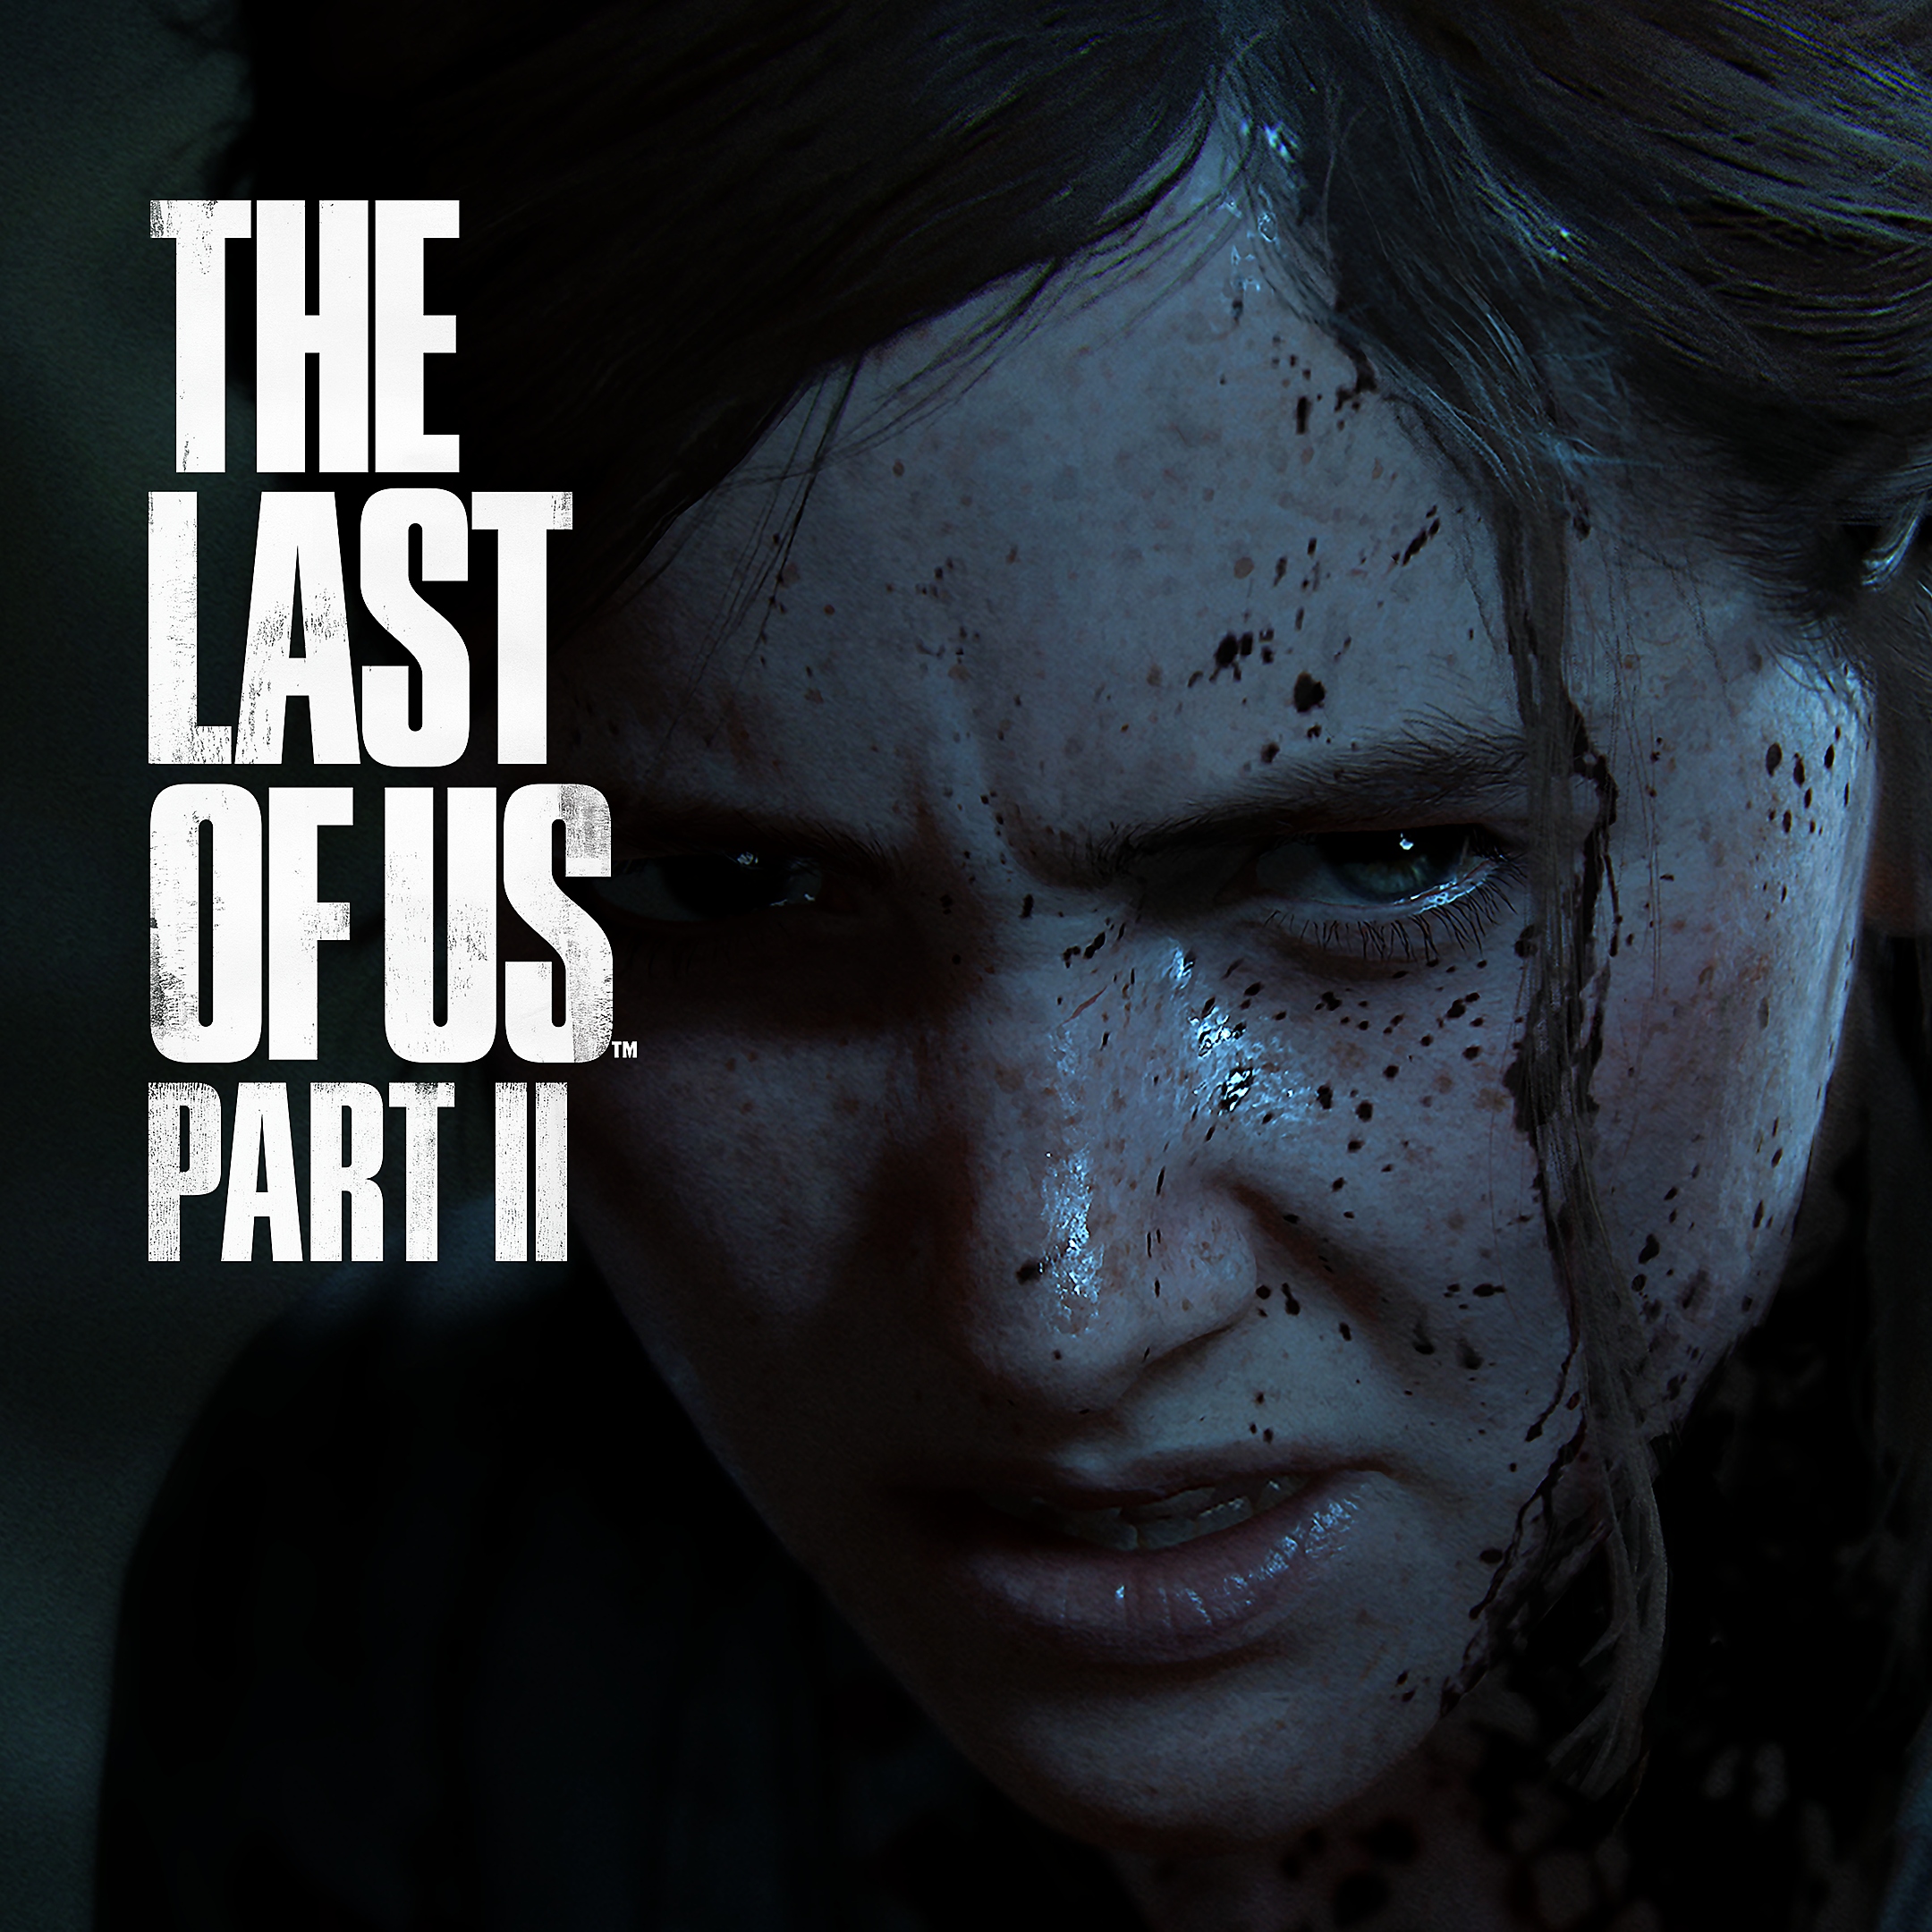 The Last of Us Part II ภาพขนาดย่อเกม